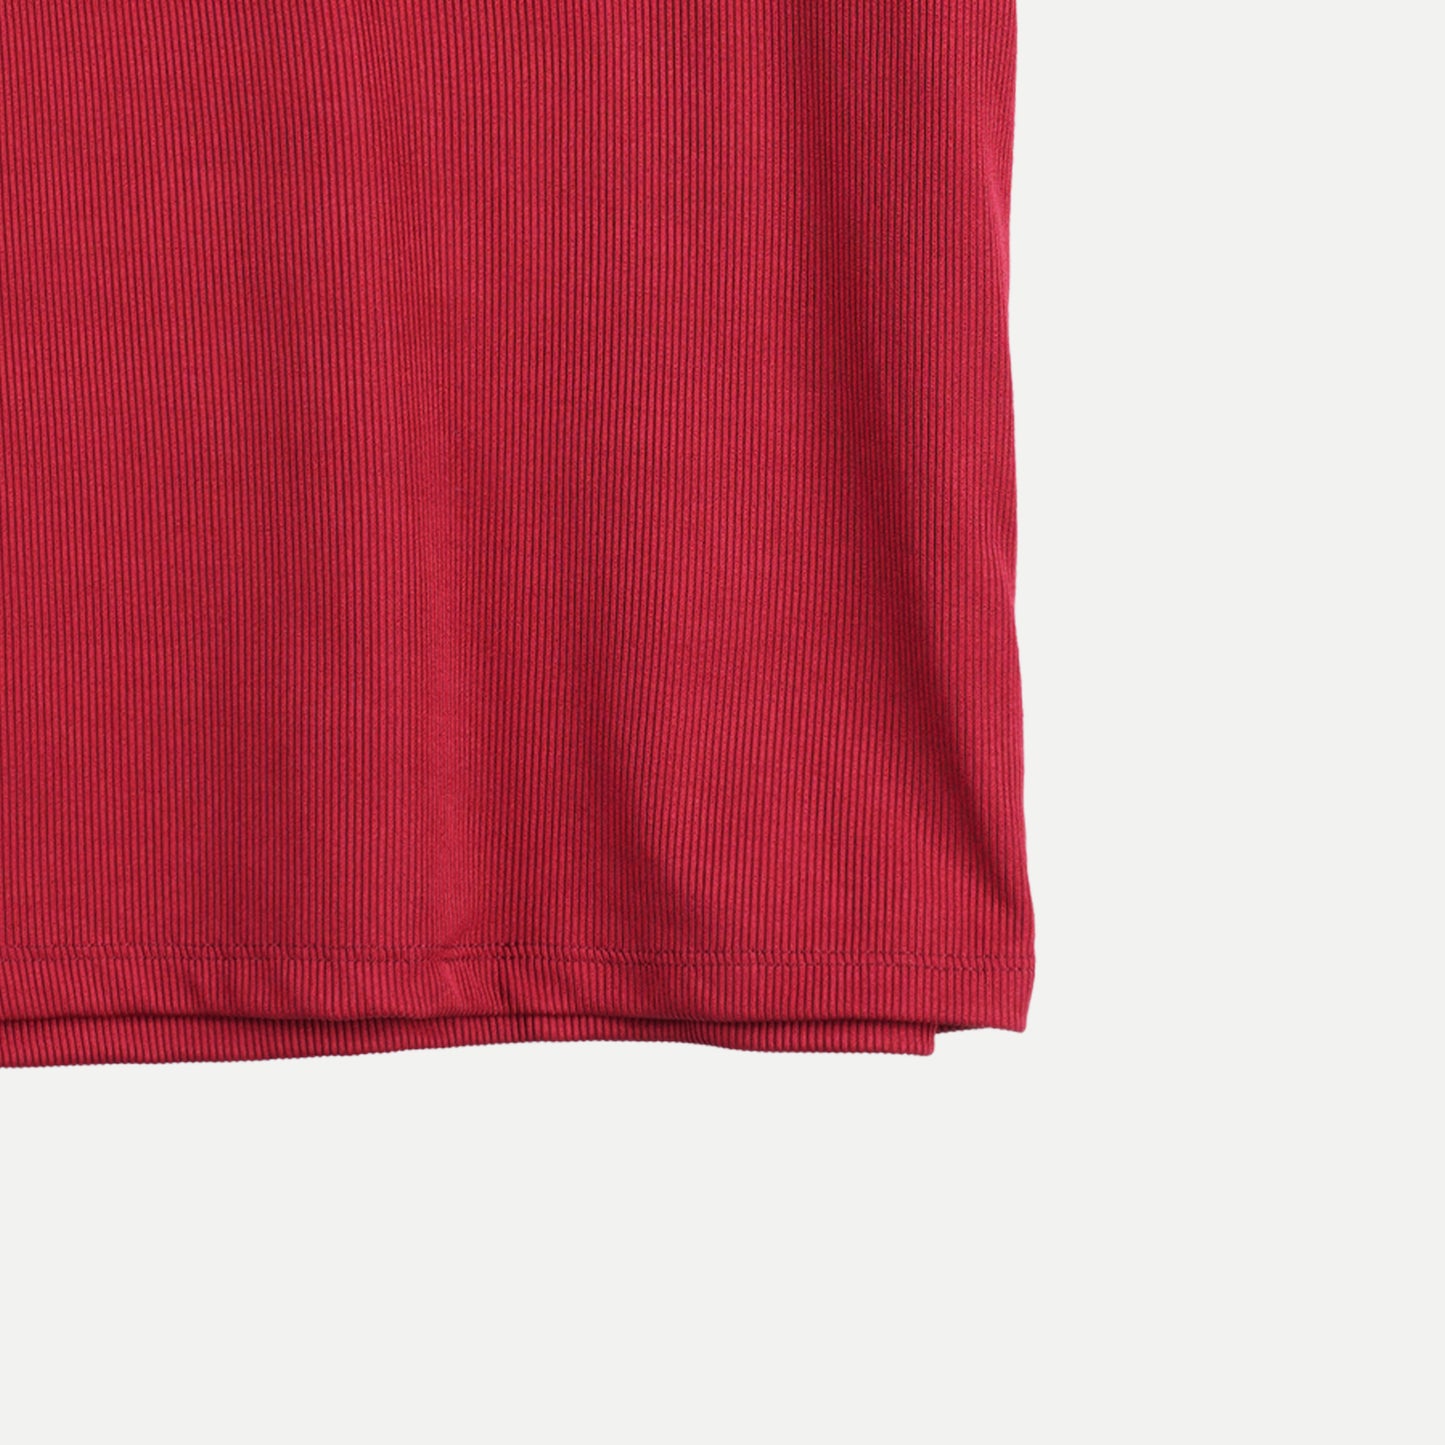 Petrol Basic Tees for Ladies Boxy Fitting Shirt CVC Jersey Fabric Trendy fashion Casual Top Crimson T-shirt for Ladies 124579-U (Crimson)